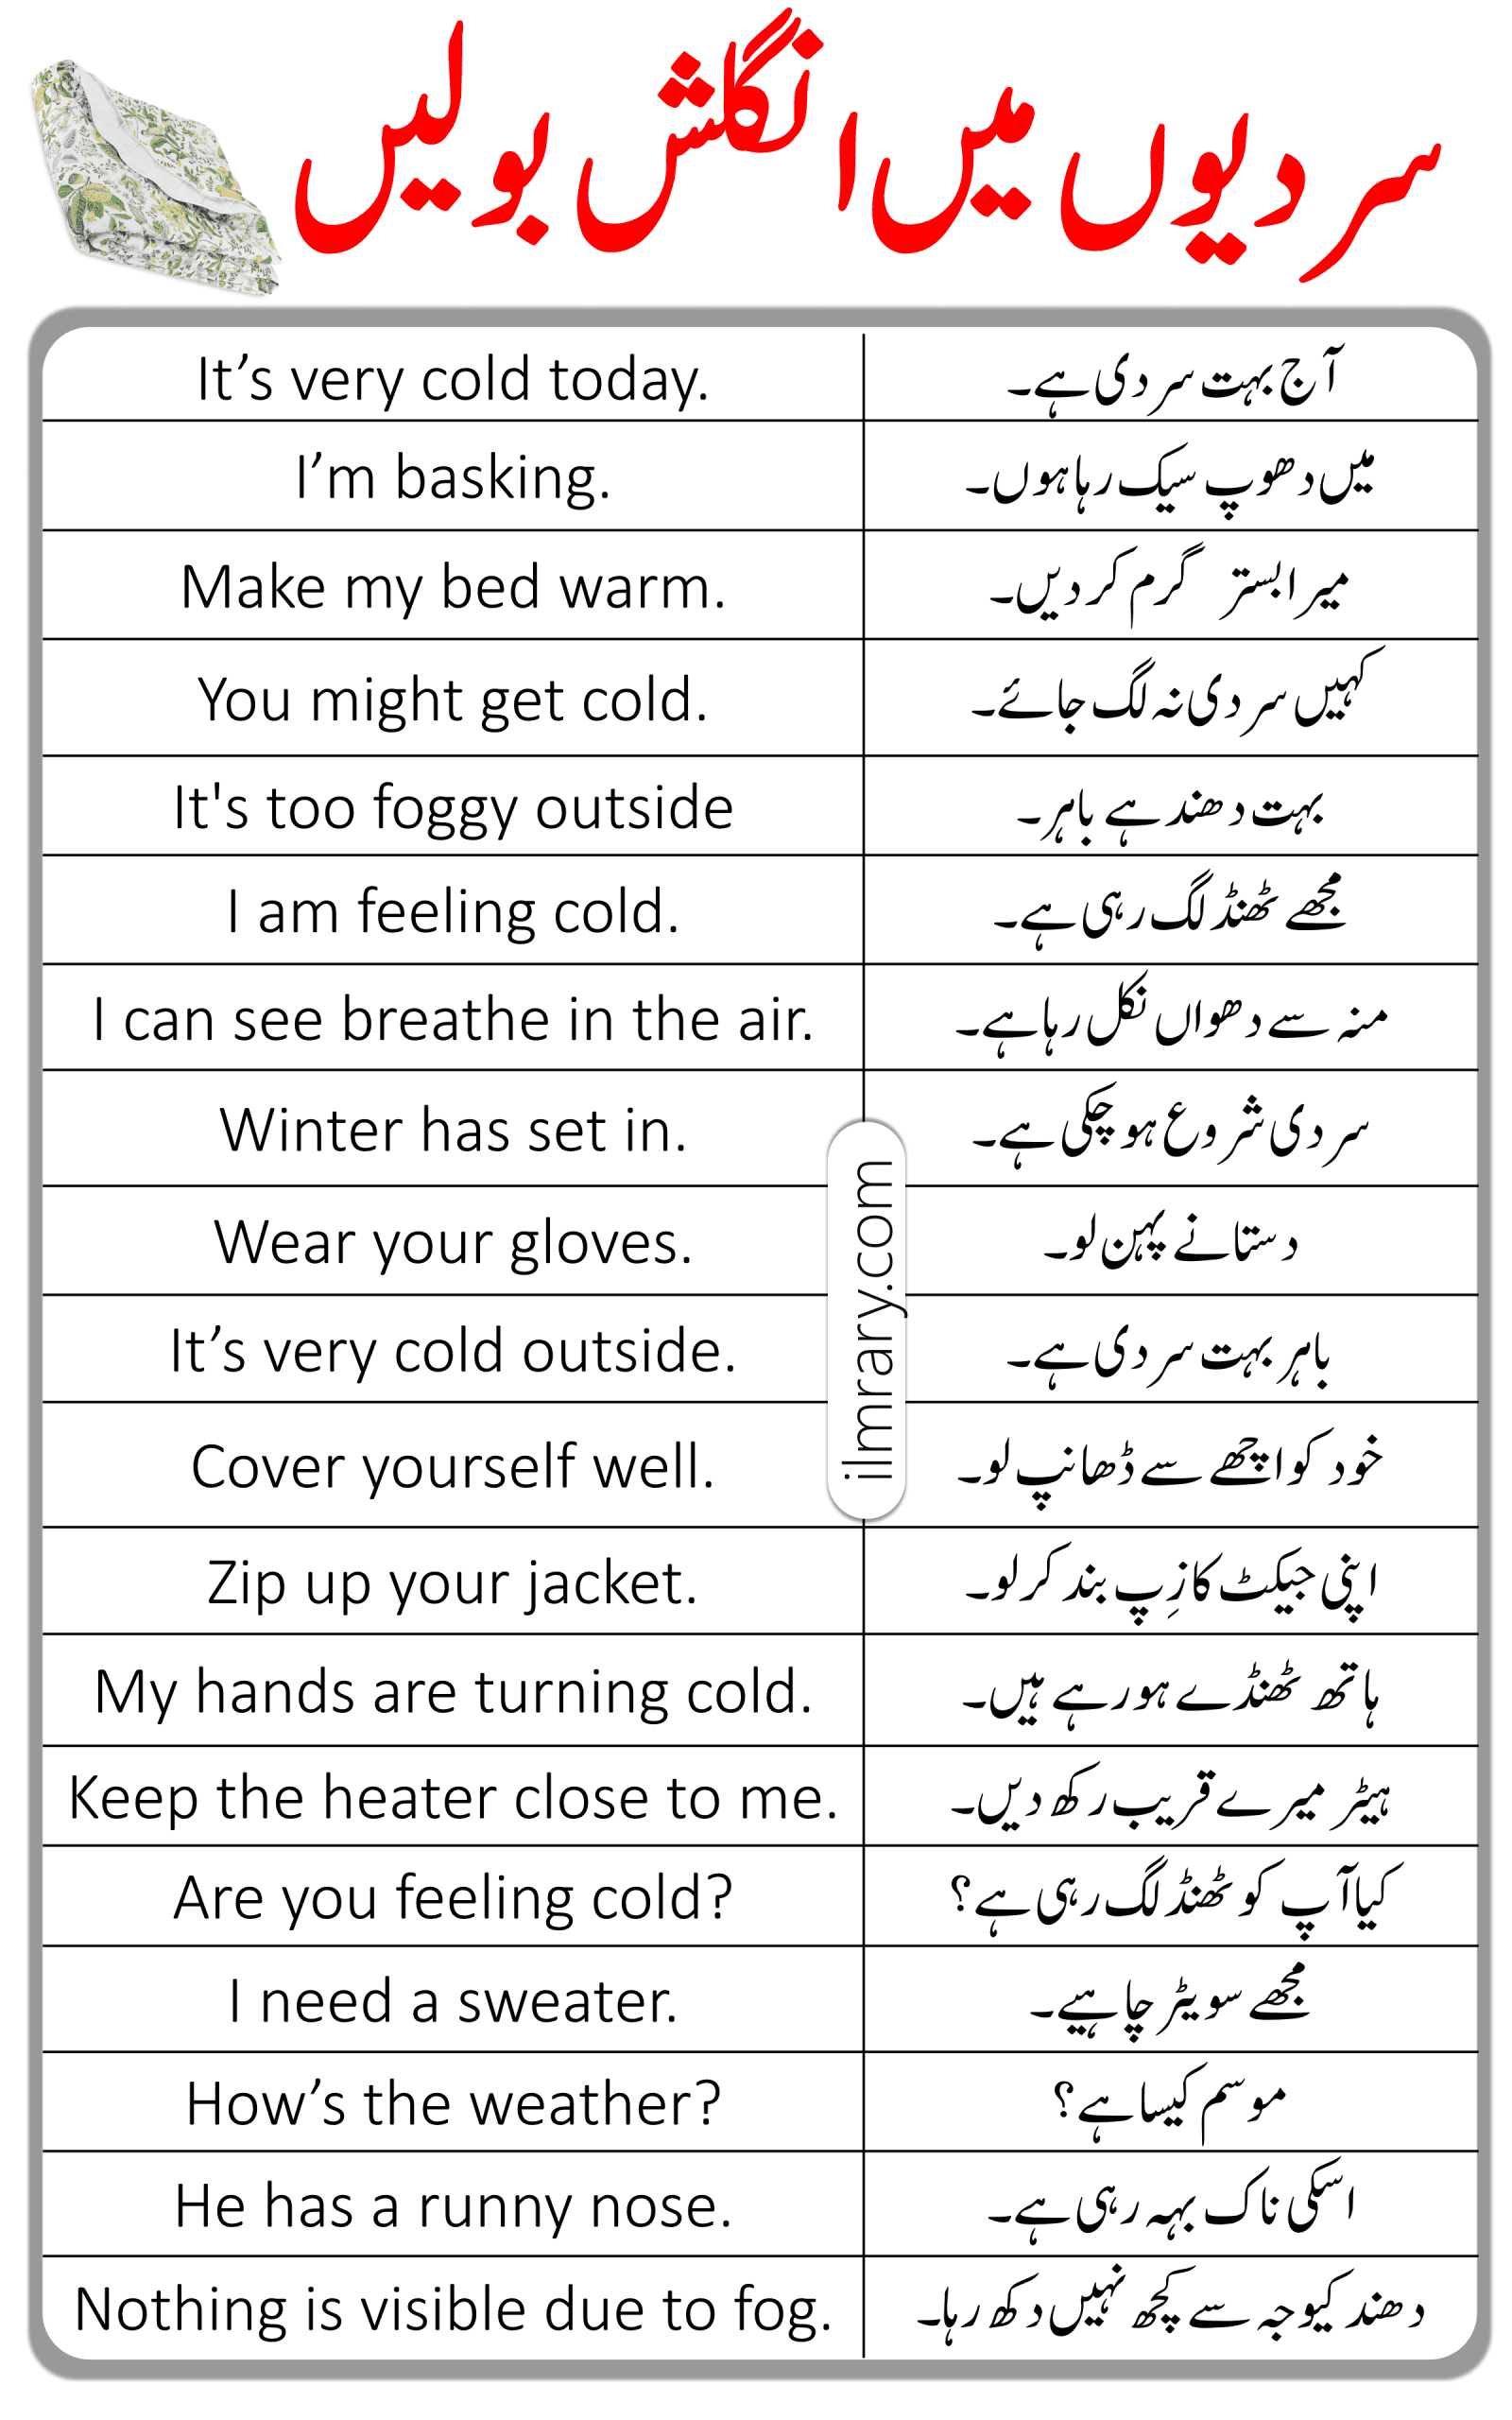 40 Winter Sentences in English with Urdu Translation 